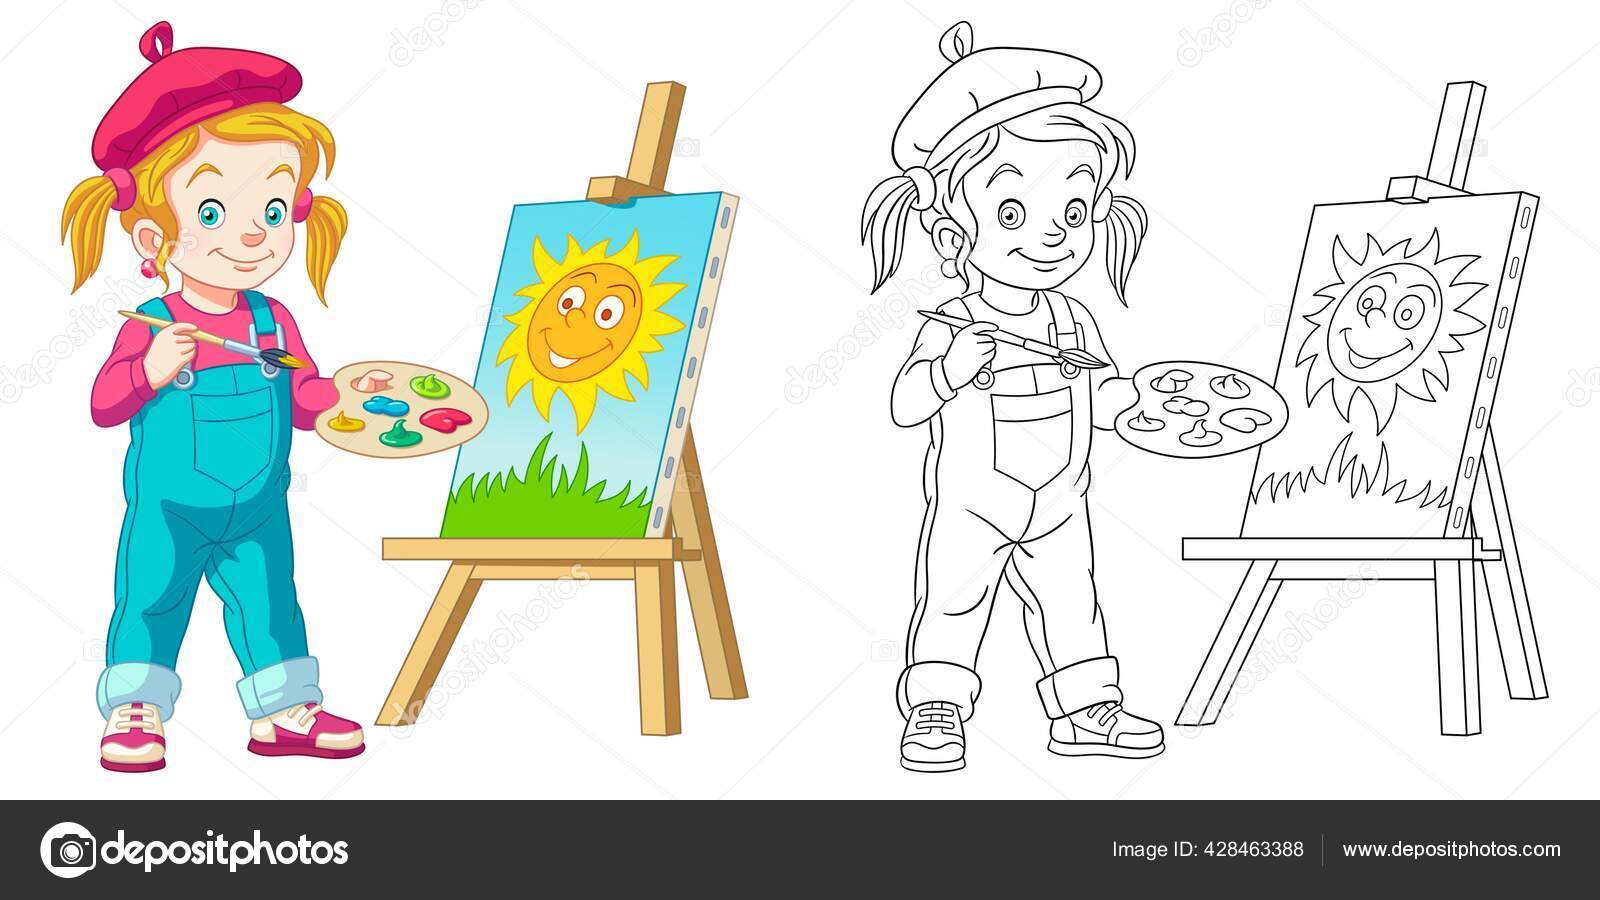 https://st2.depositphotos.com/2444145/42846/v/1600/depositphotos_428463388-stock-illustration-coloring-page-girl-painting-line.jpg